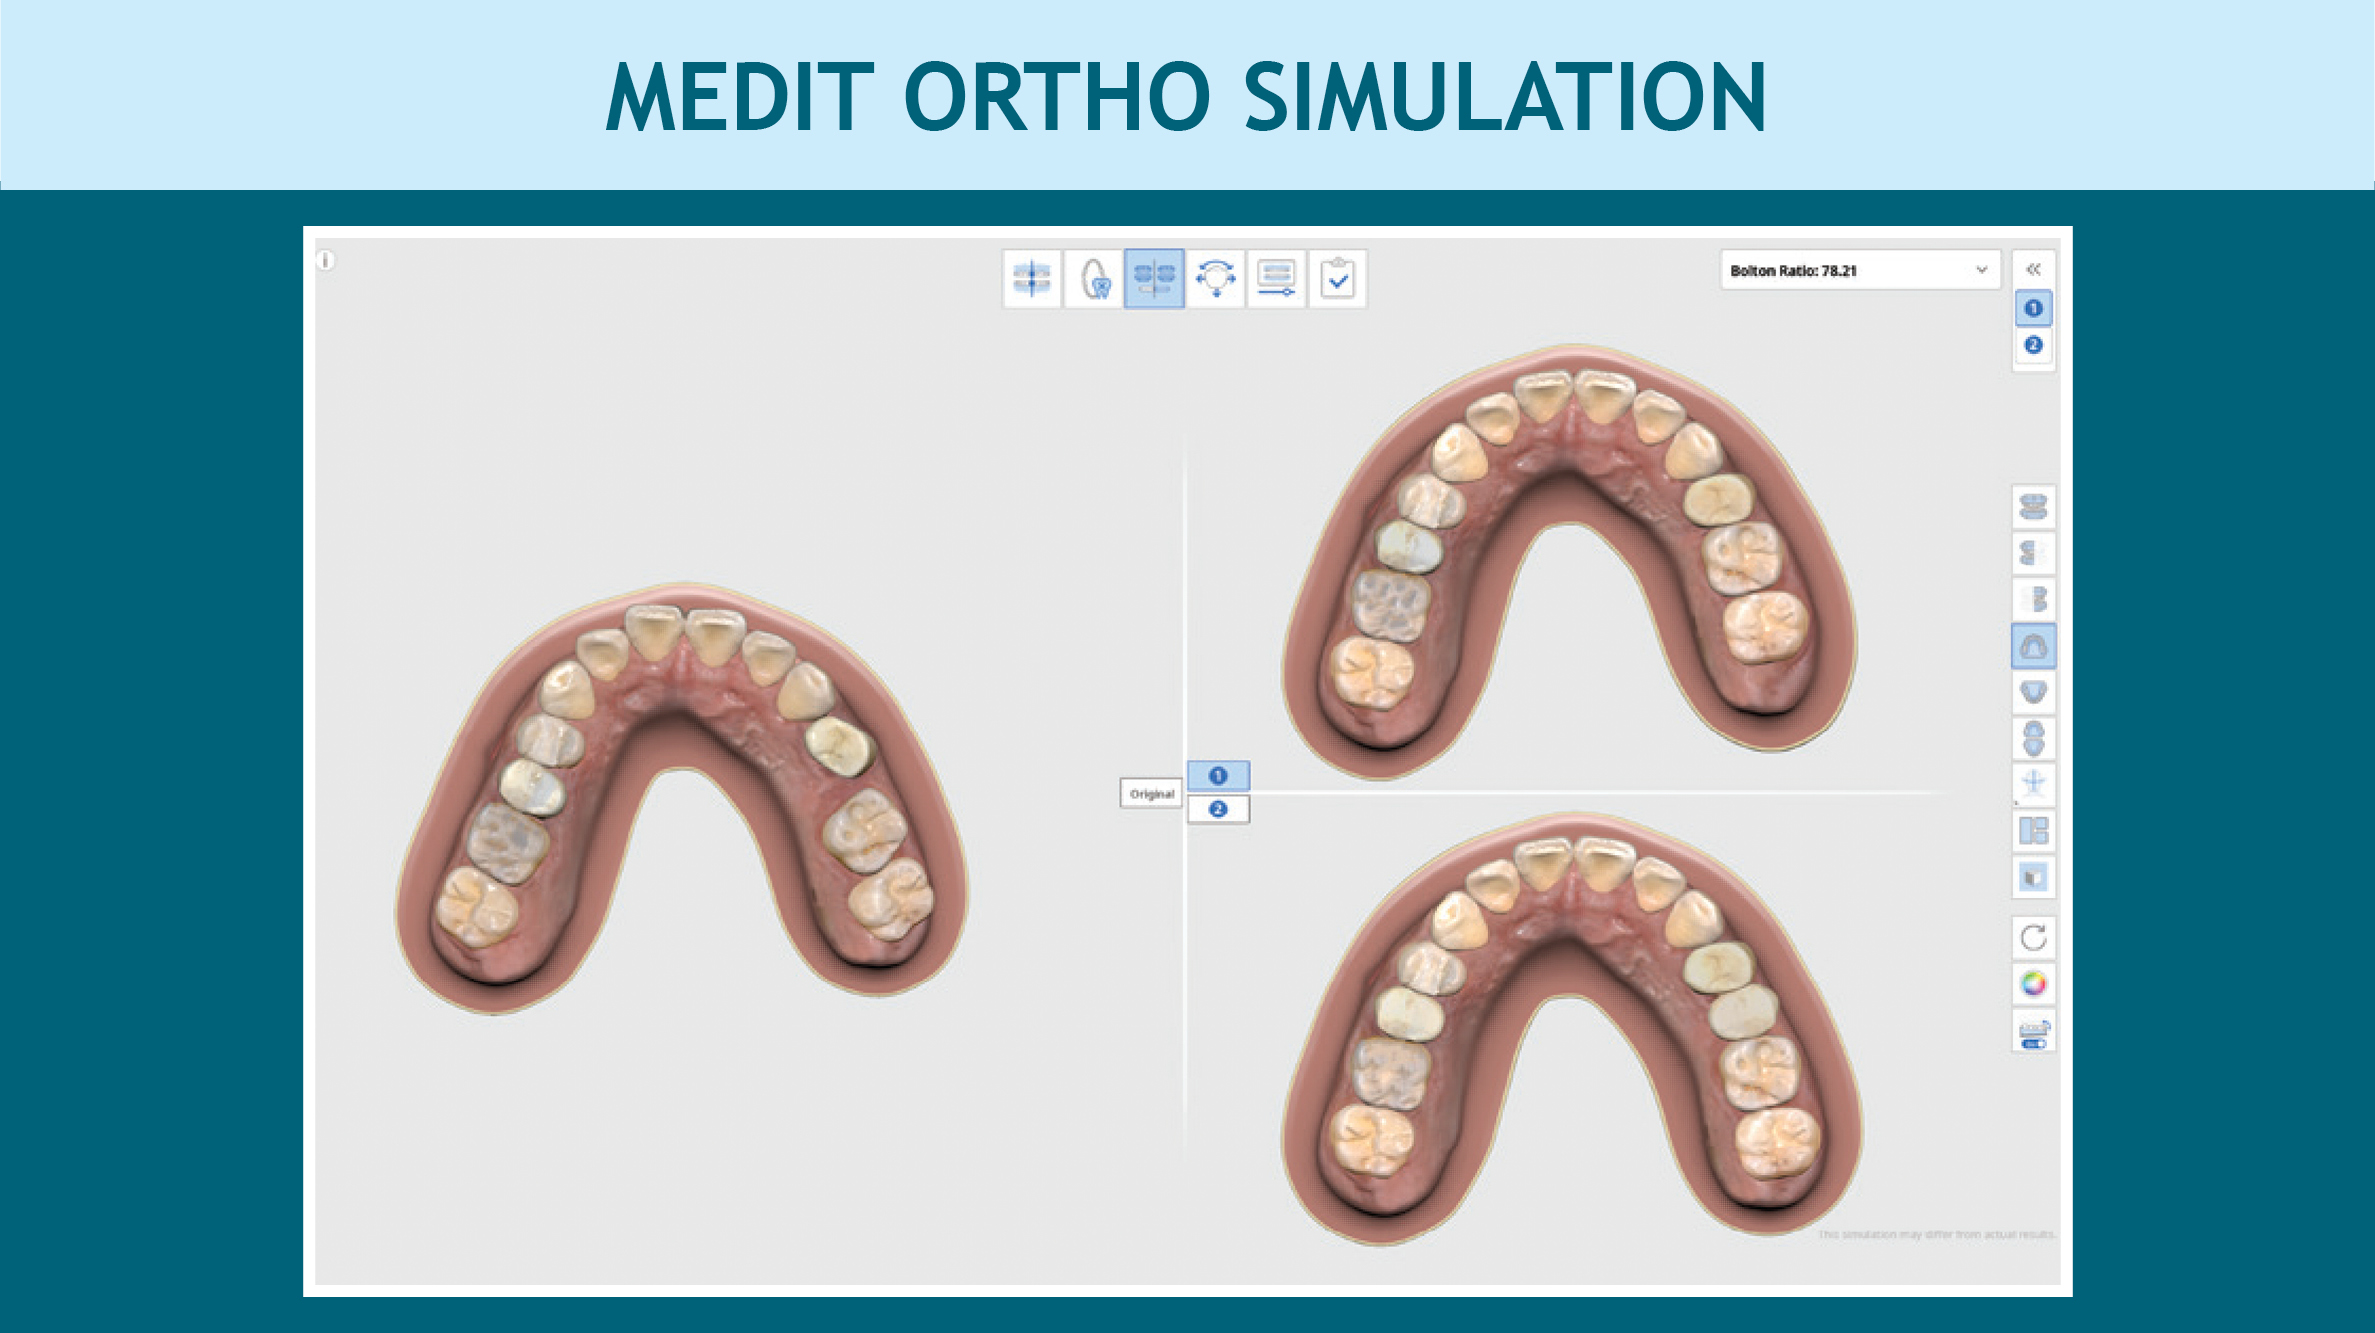 medit ortho simulation app image